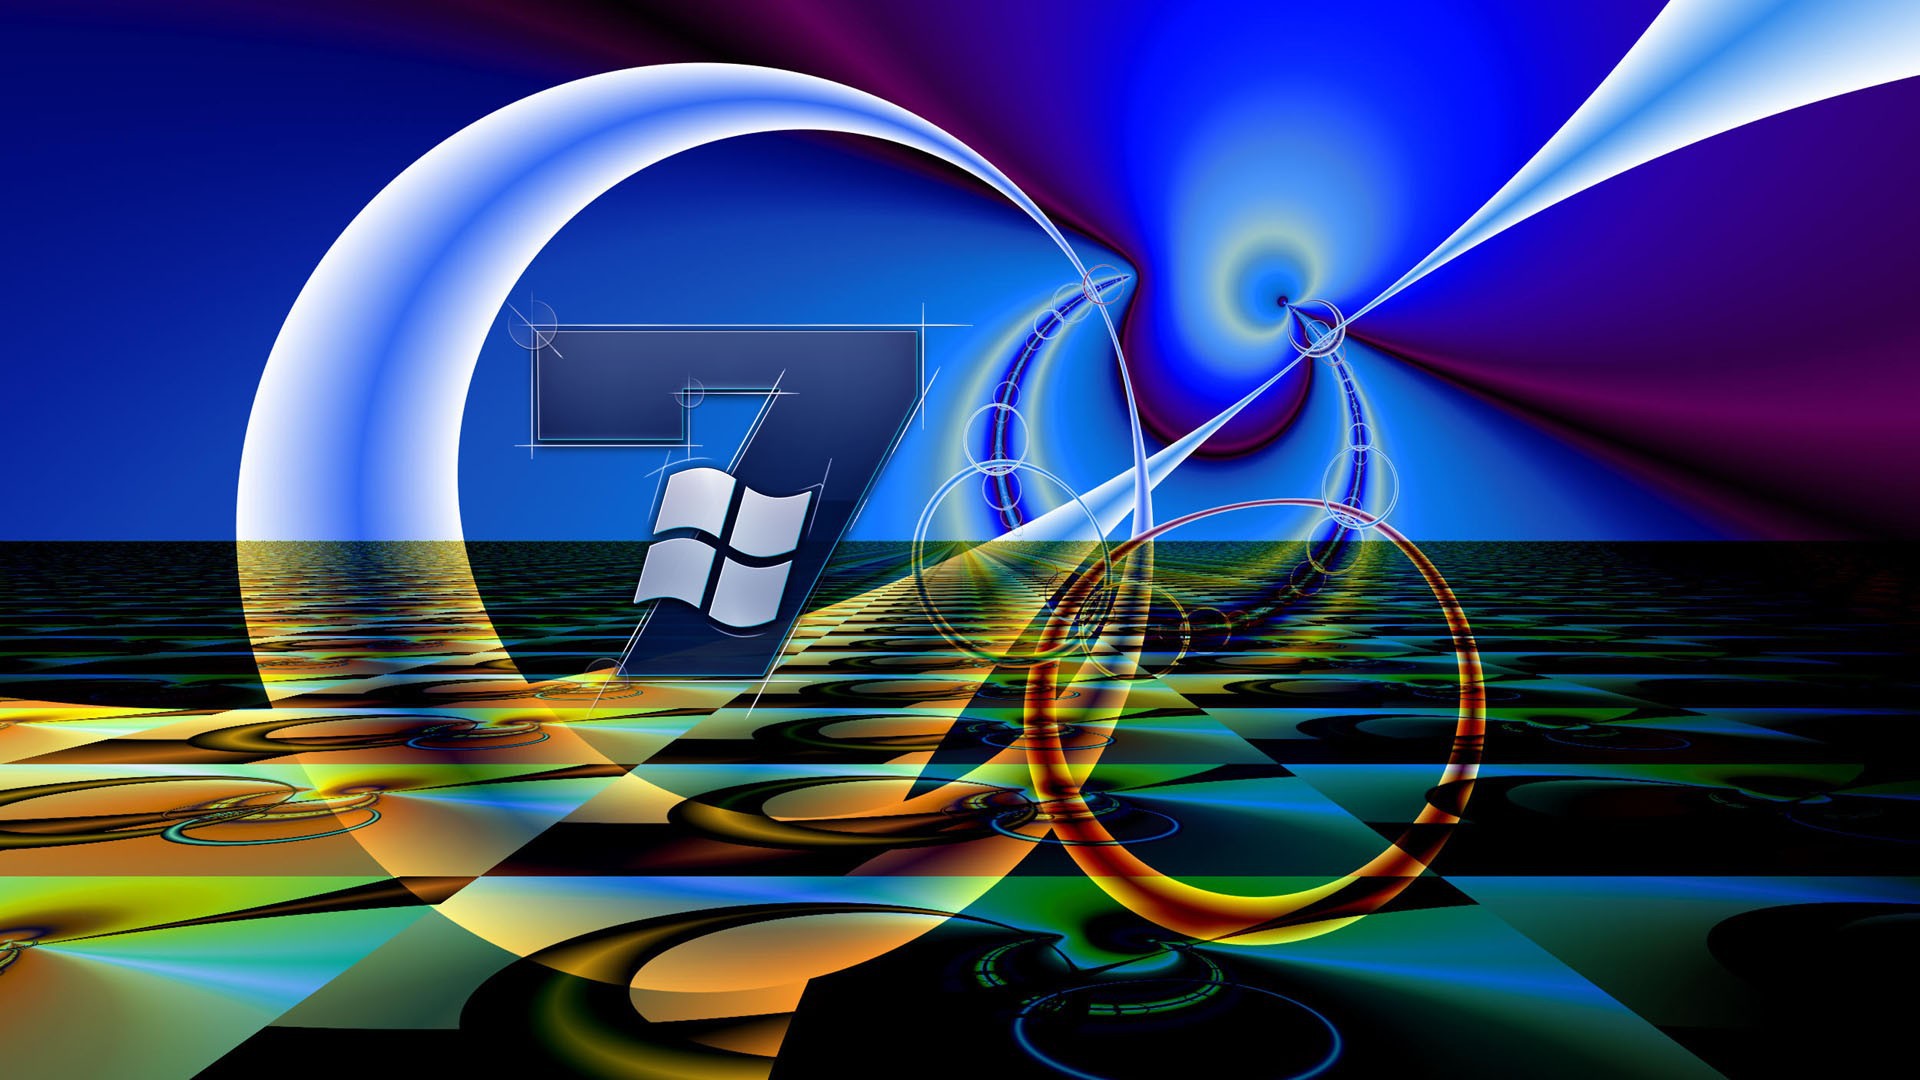 Microsoft Windows 7 Backgrounds - WallpaperSafari